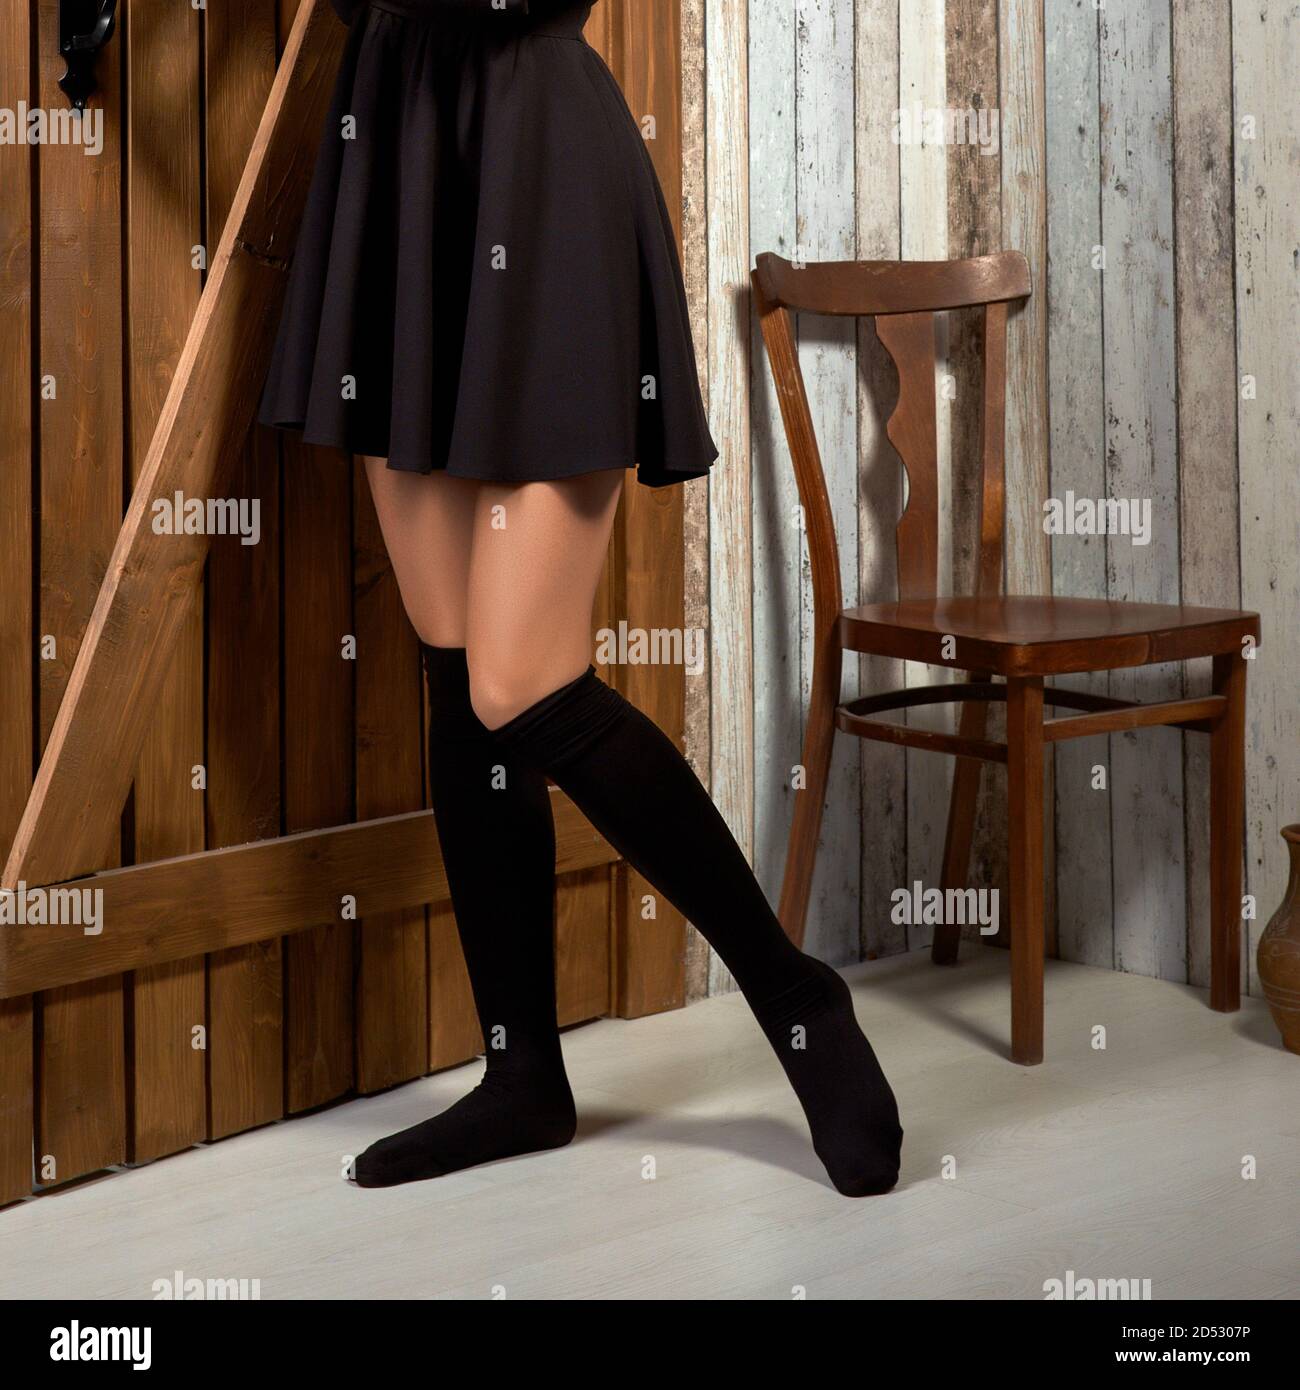 Female legs in overknee socks near wooden door (image contains a little noise) Stock Photo